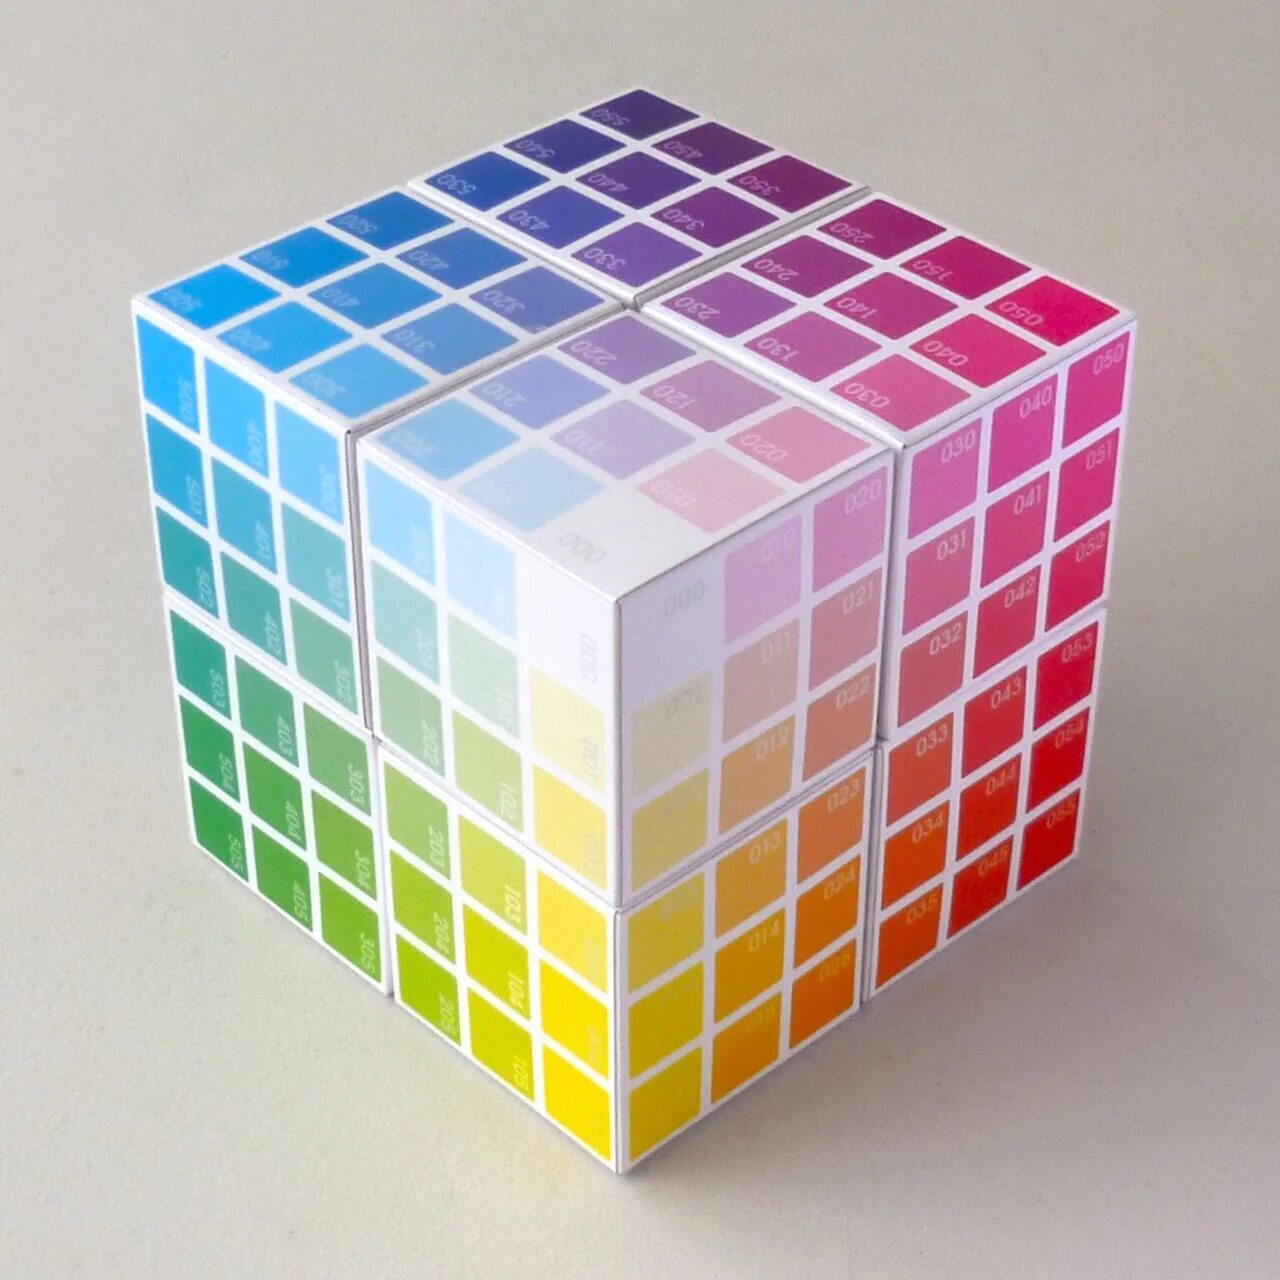 Cube цвет. Разноцветные кубики. Куб. Разноцветный куб. 3д куб.